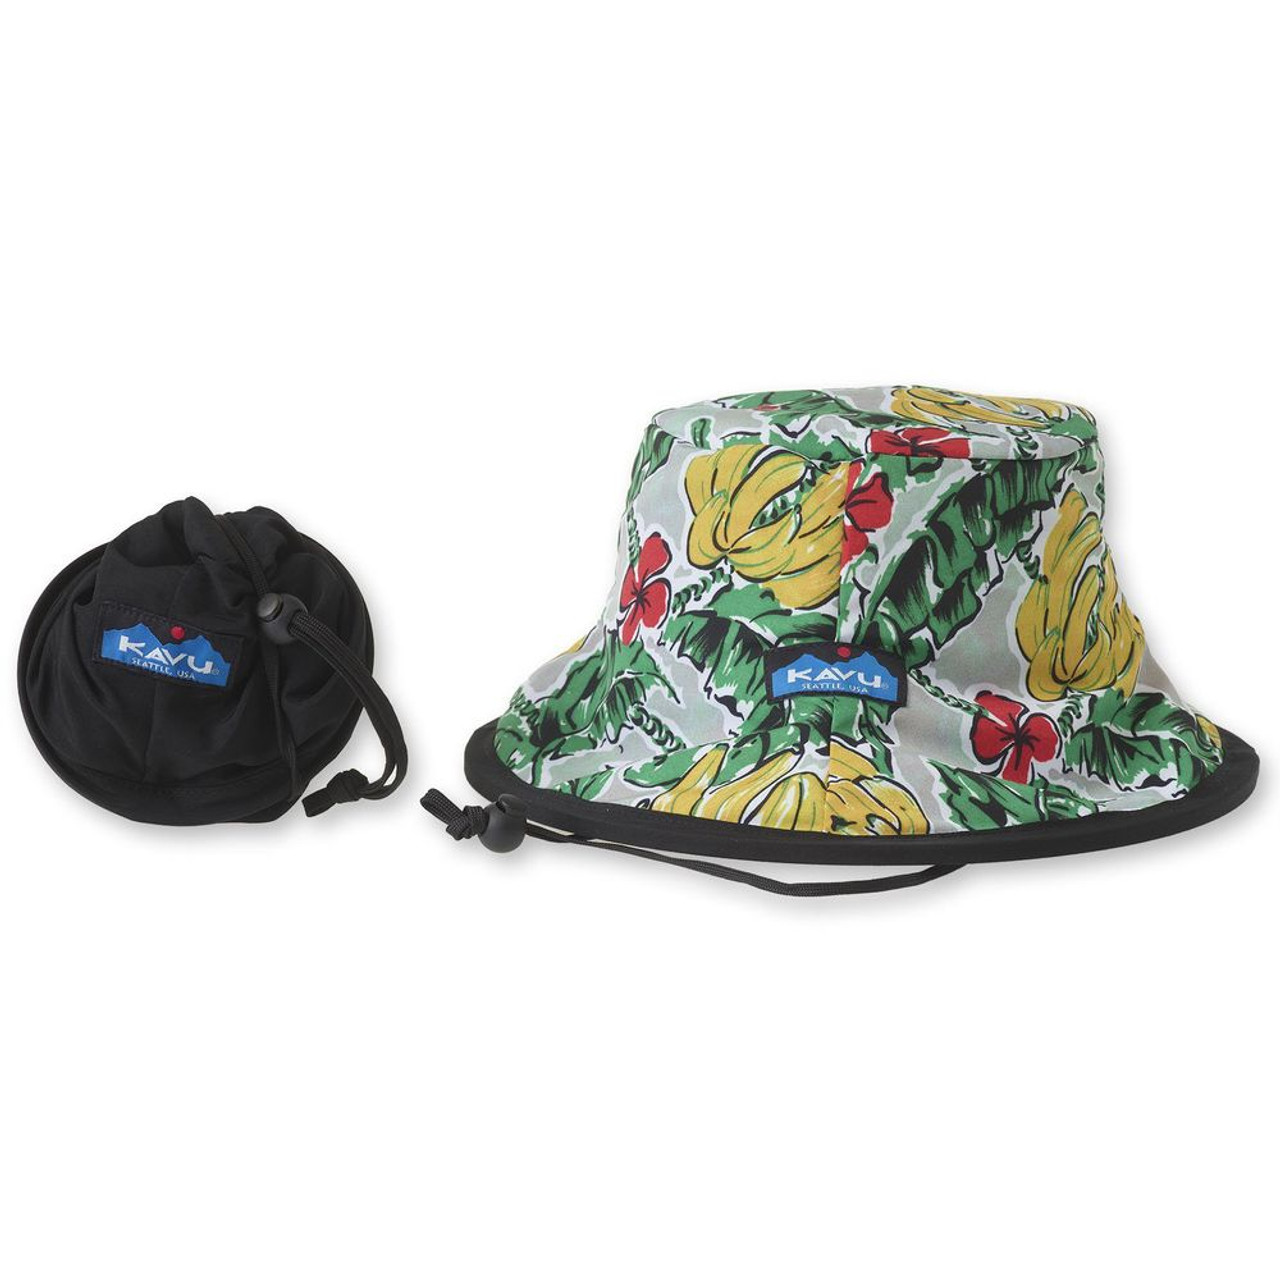 Kavu Fisherman Chillba bucket hat in black